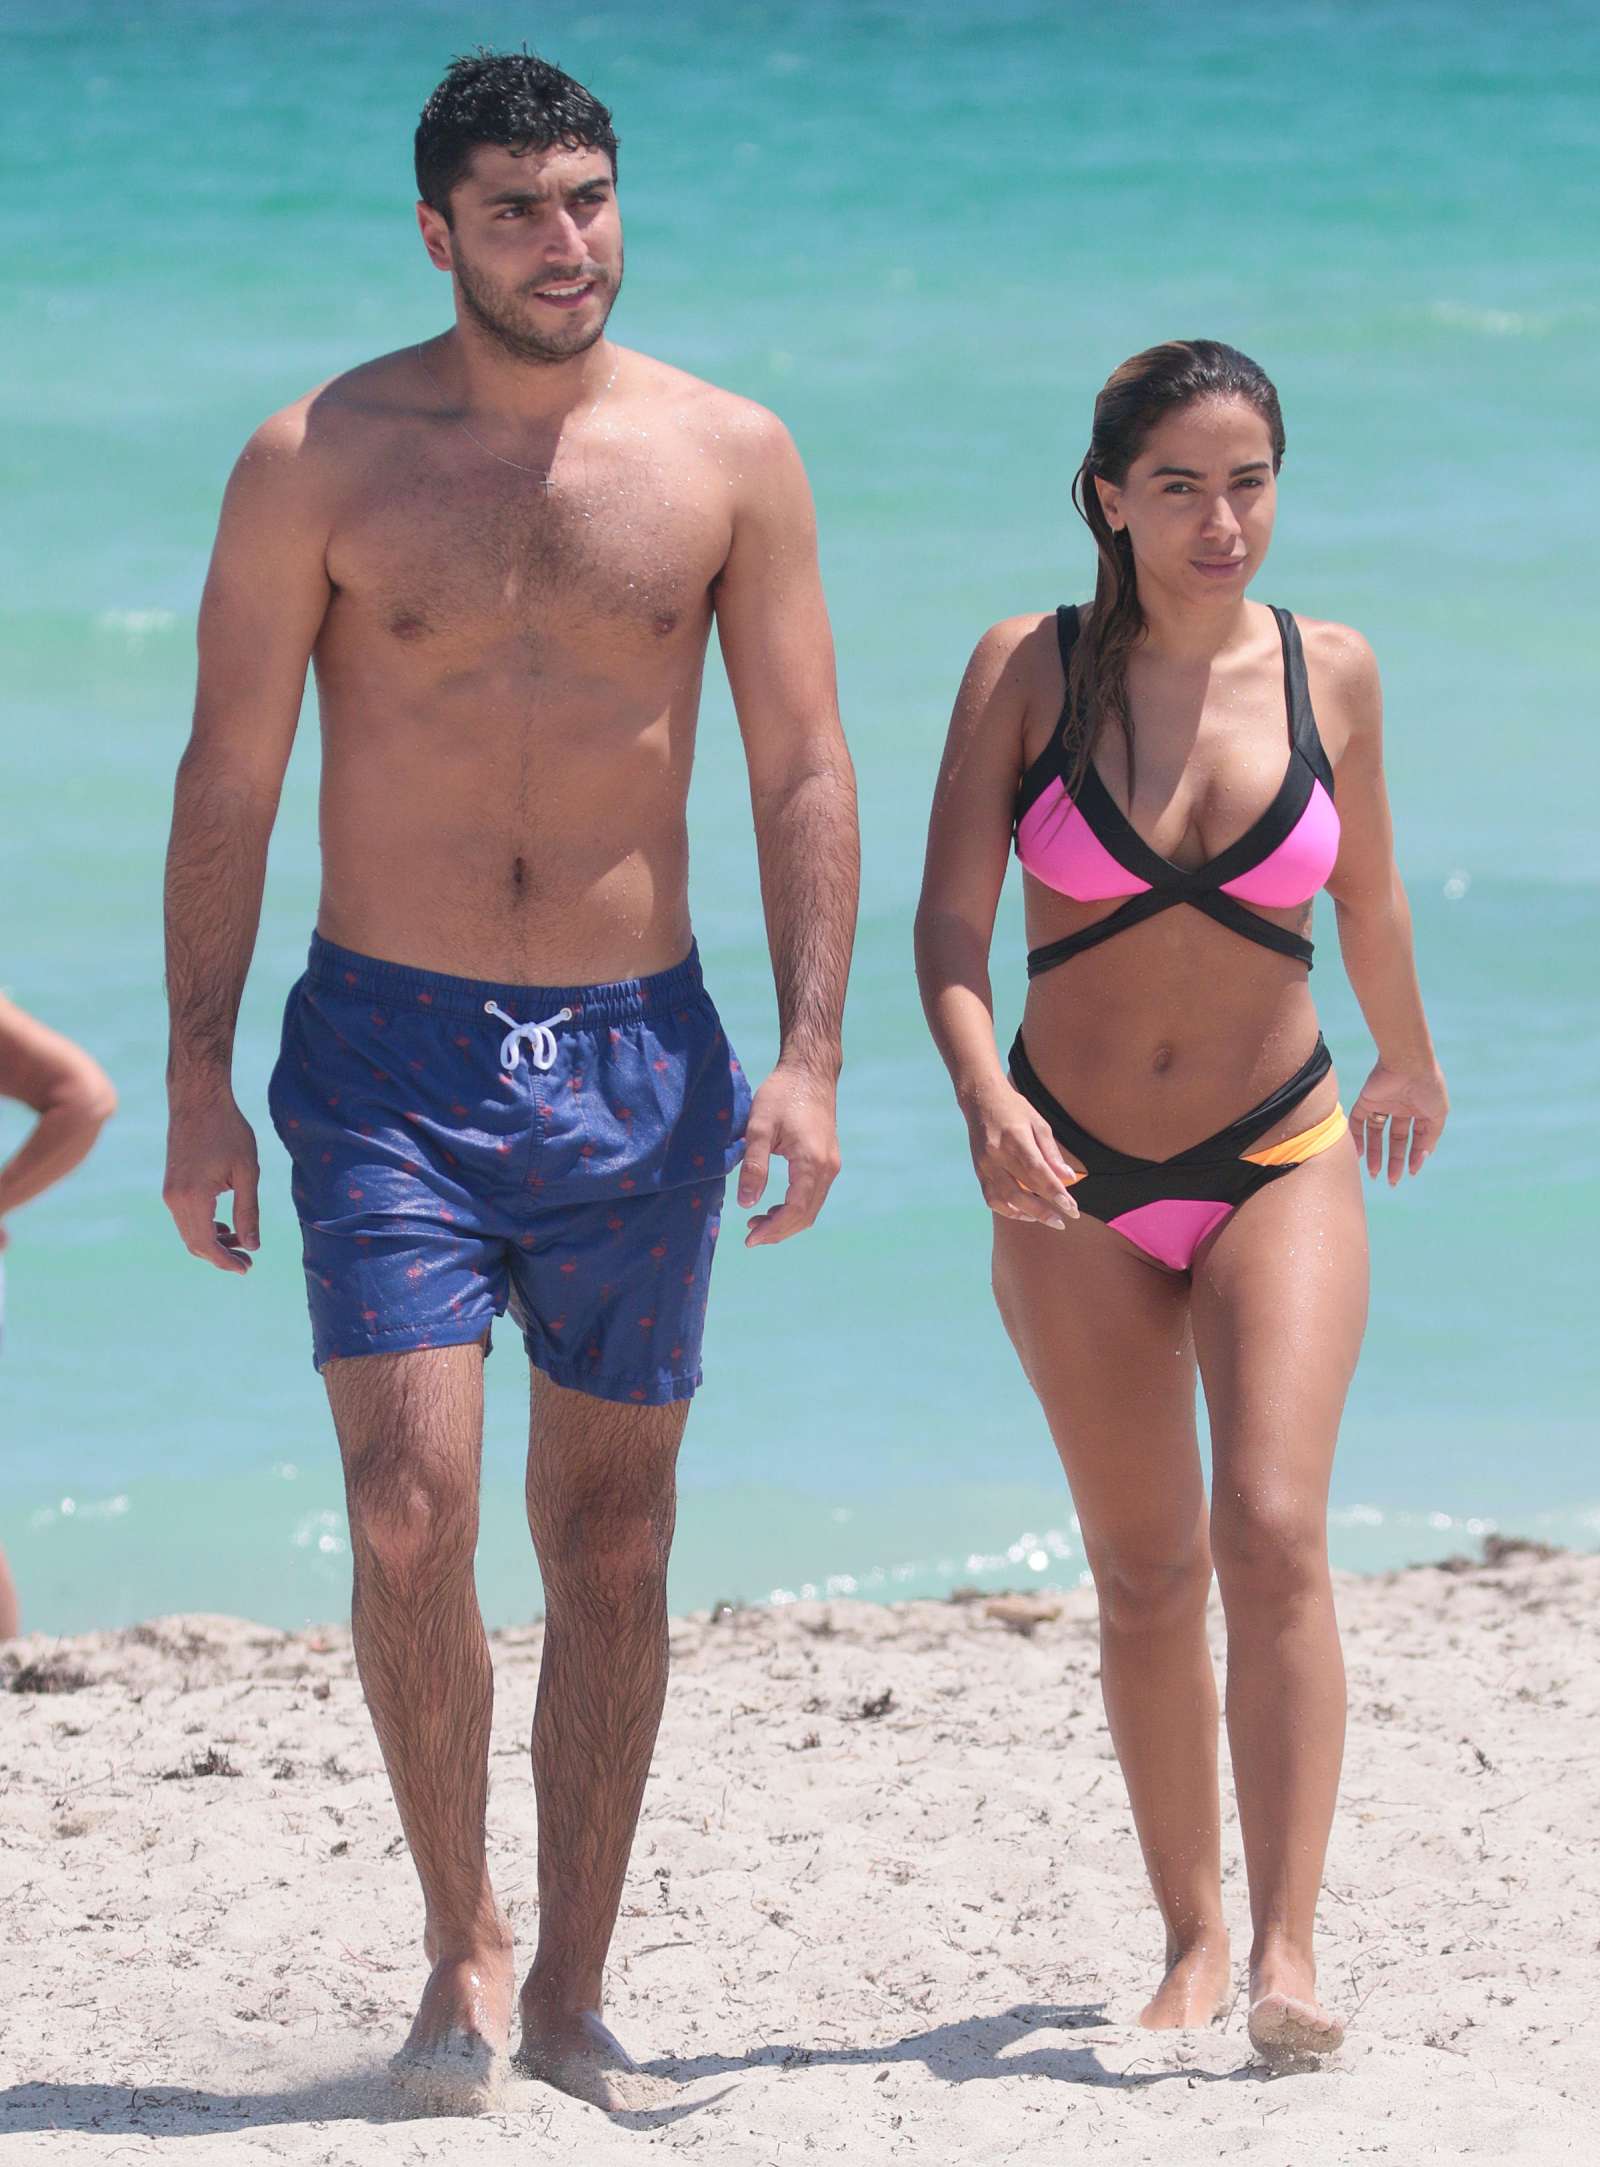 Anitta in Pink and Black Bikini at the beach in Miami